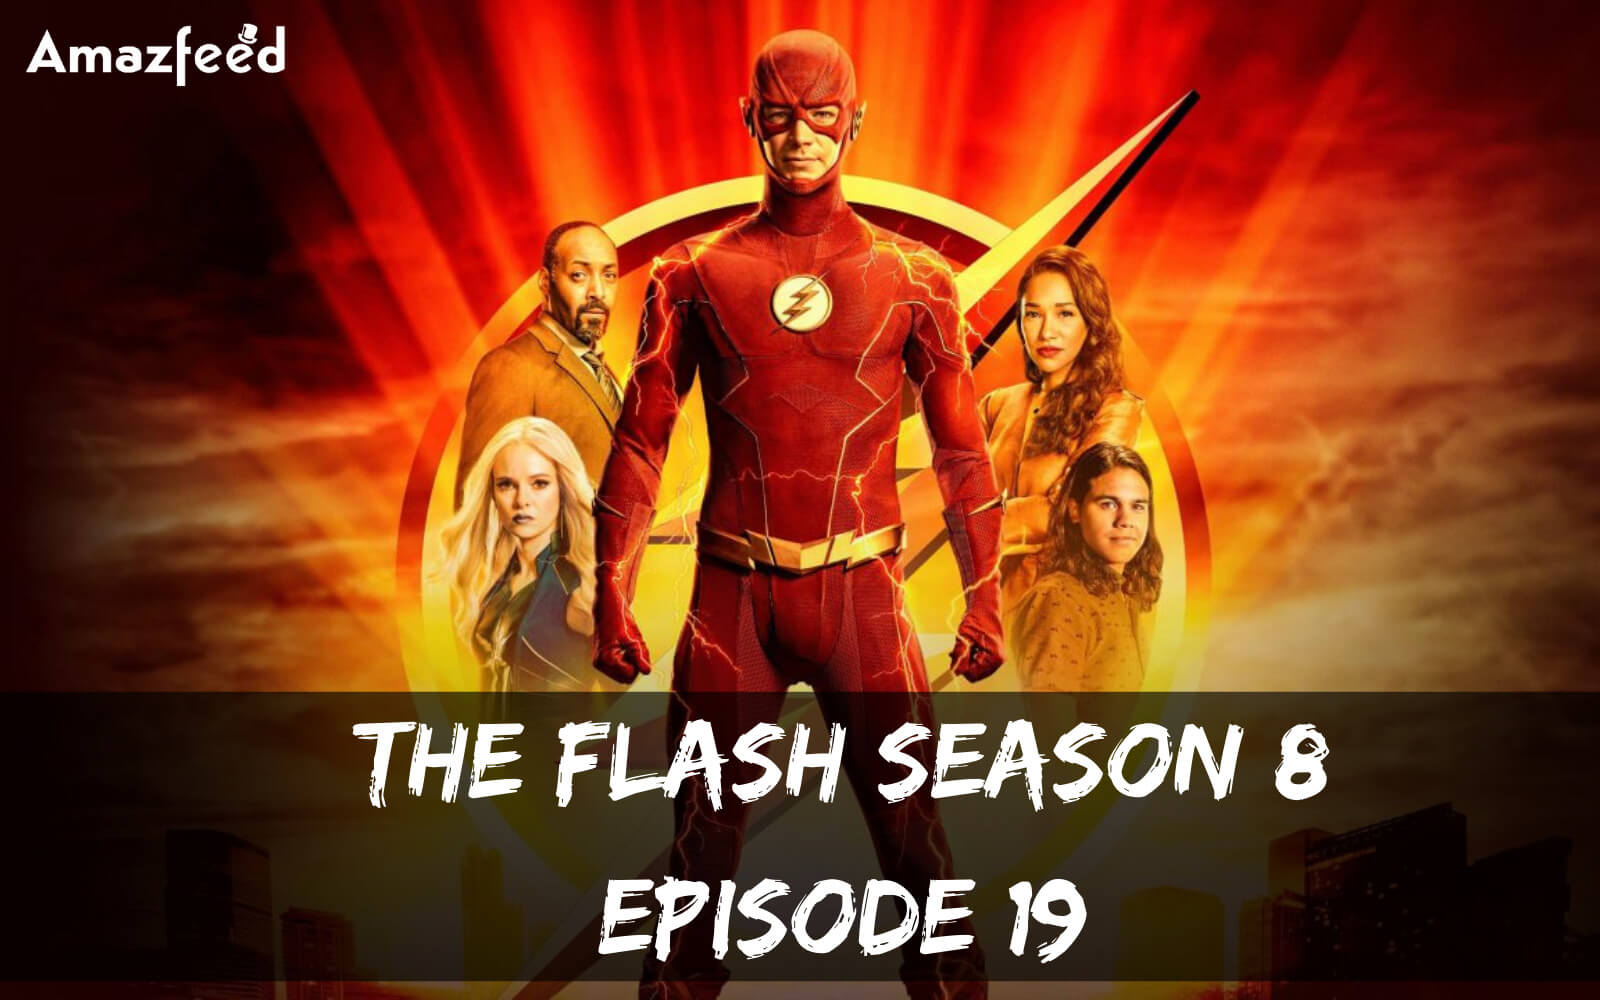 The Flash season 8 episode 19 release date